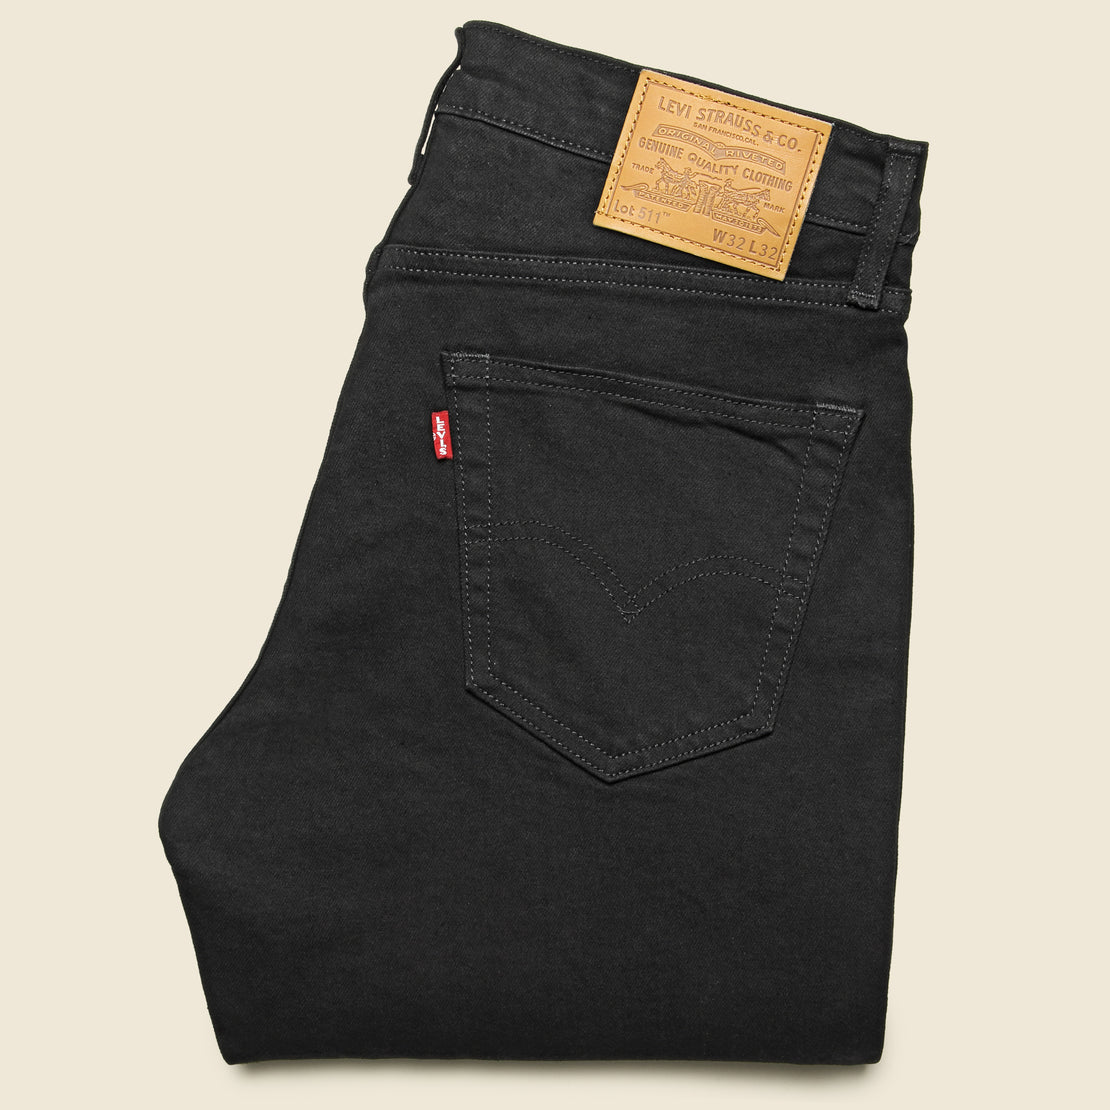 511 Slim Fit Jean - Black Knight - Levis Premium - STAG Provisions - Pants - Denim